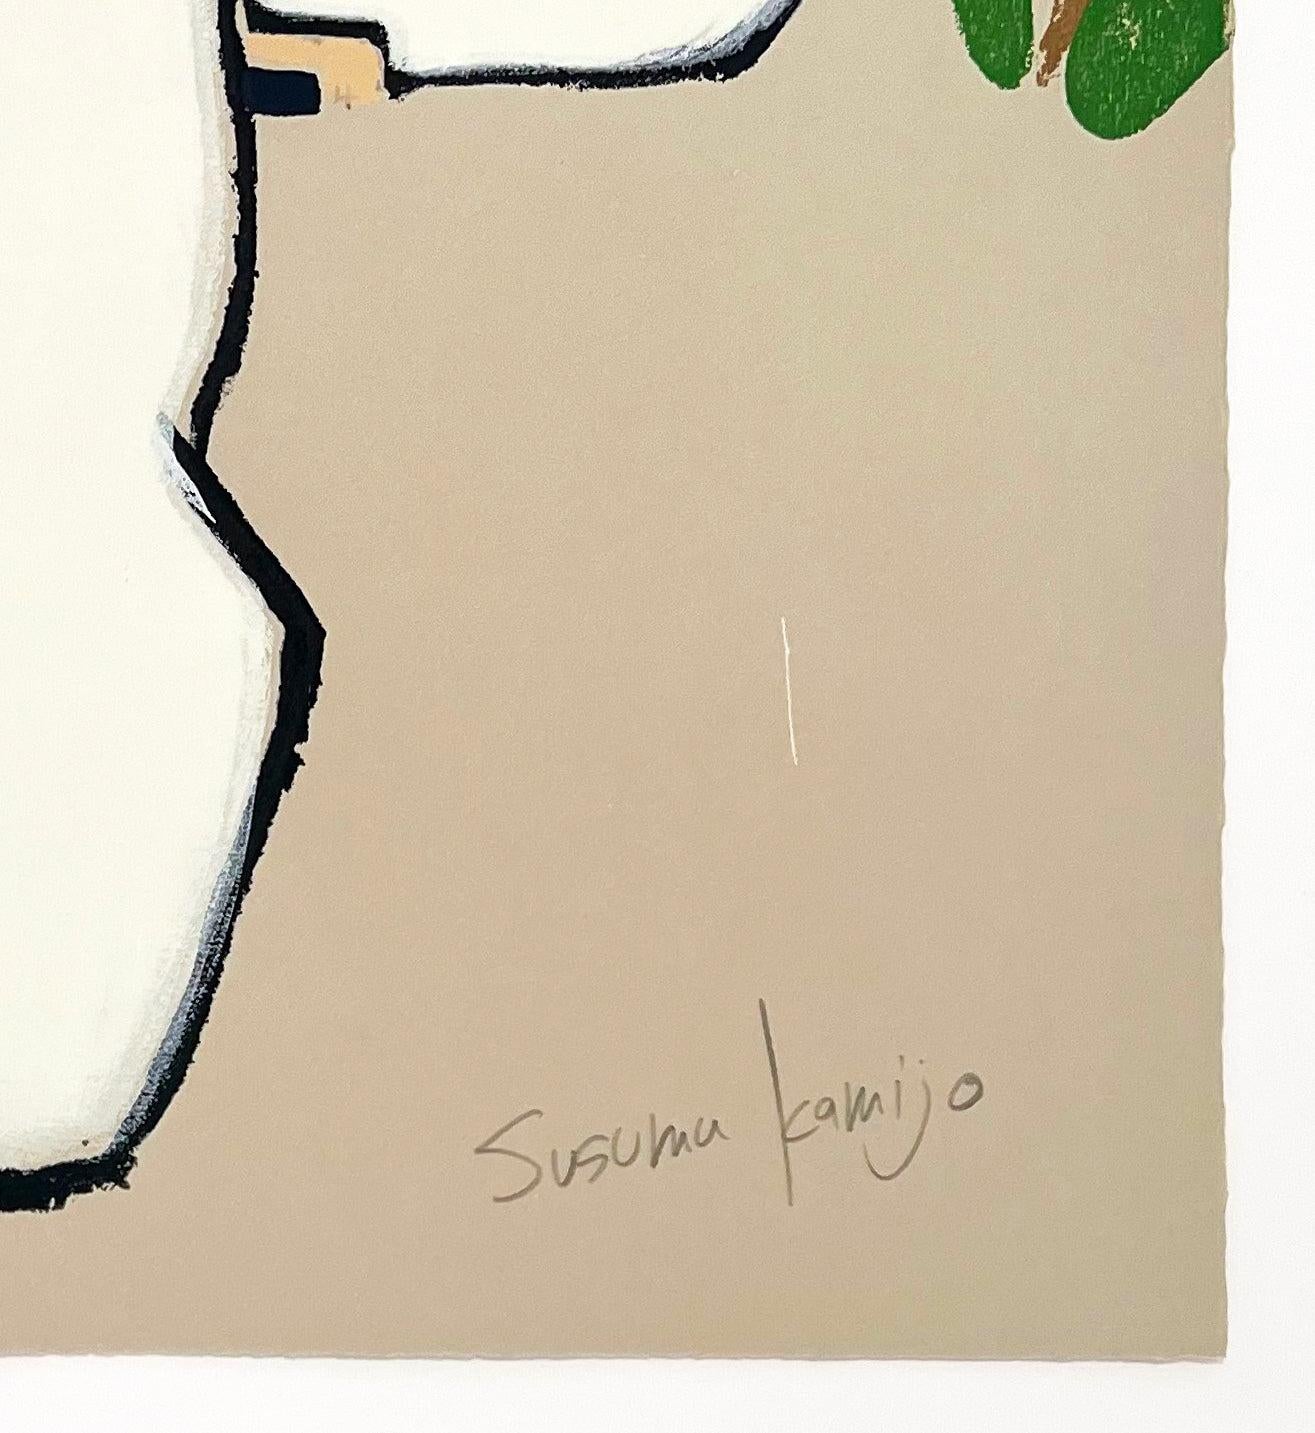 Artist: Susumu Kamijo
Title: Comes A Time
Medium: 35 color silkscreen and 3 color woodblock on Somerset Velvet Newsprint Grey
Date: 2022
Edition: 30/60
Frame Size: 42